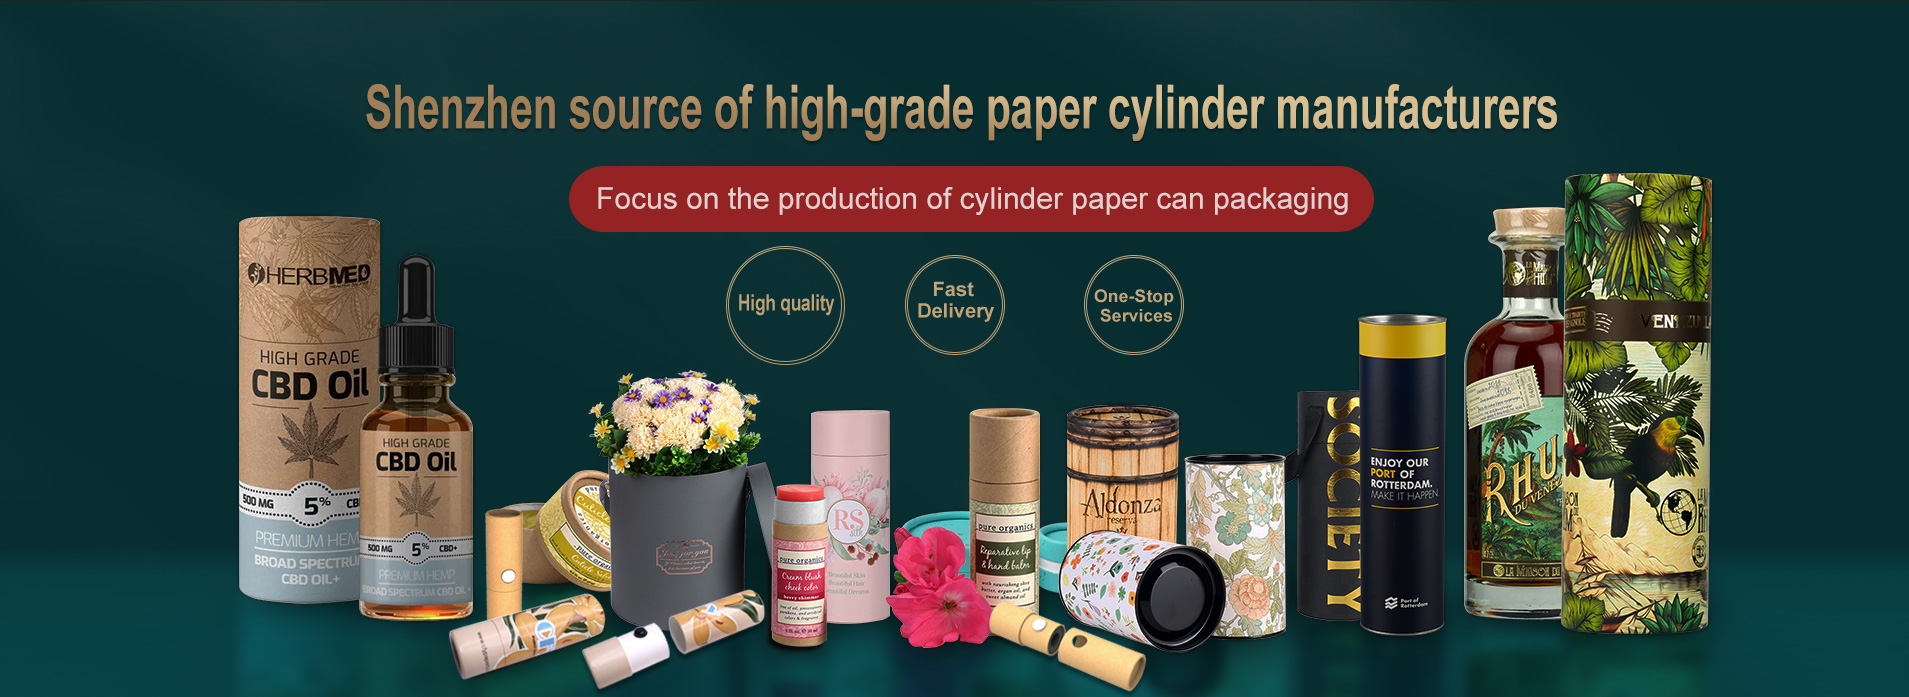 Shenzhen source of high-grade paper cylinder manufacturers